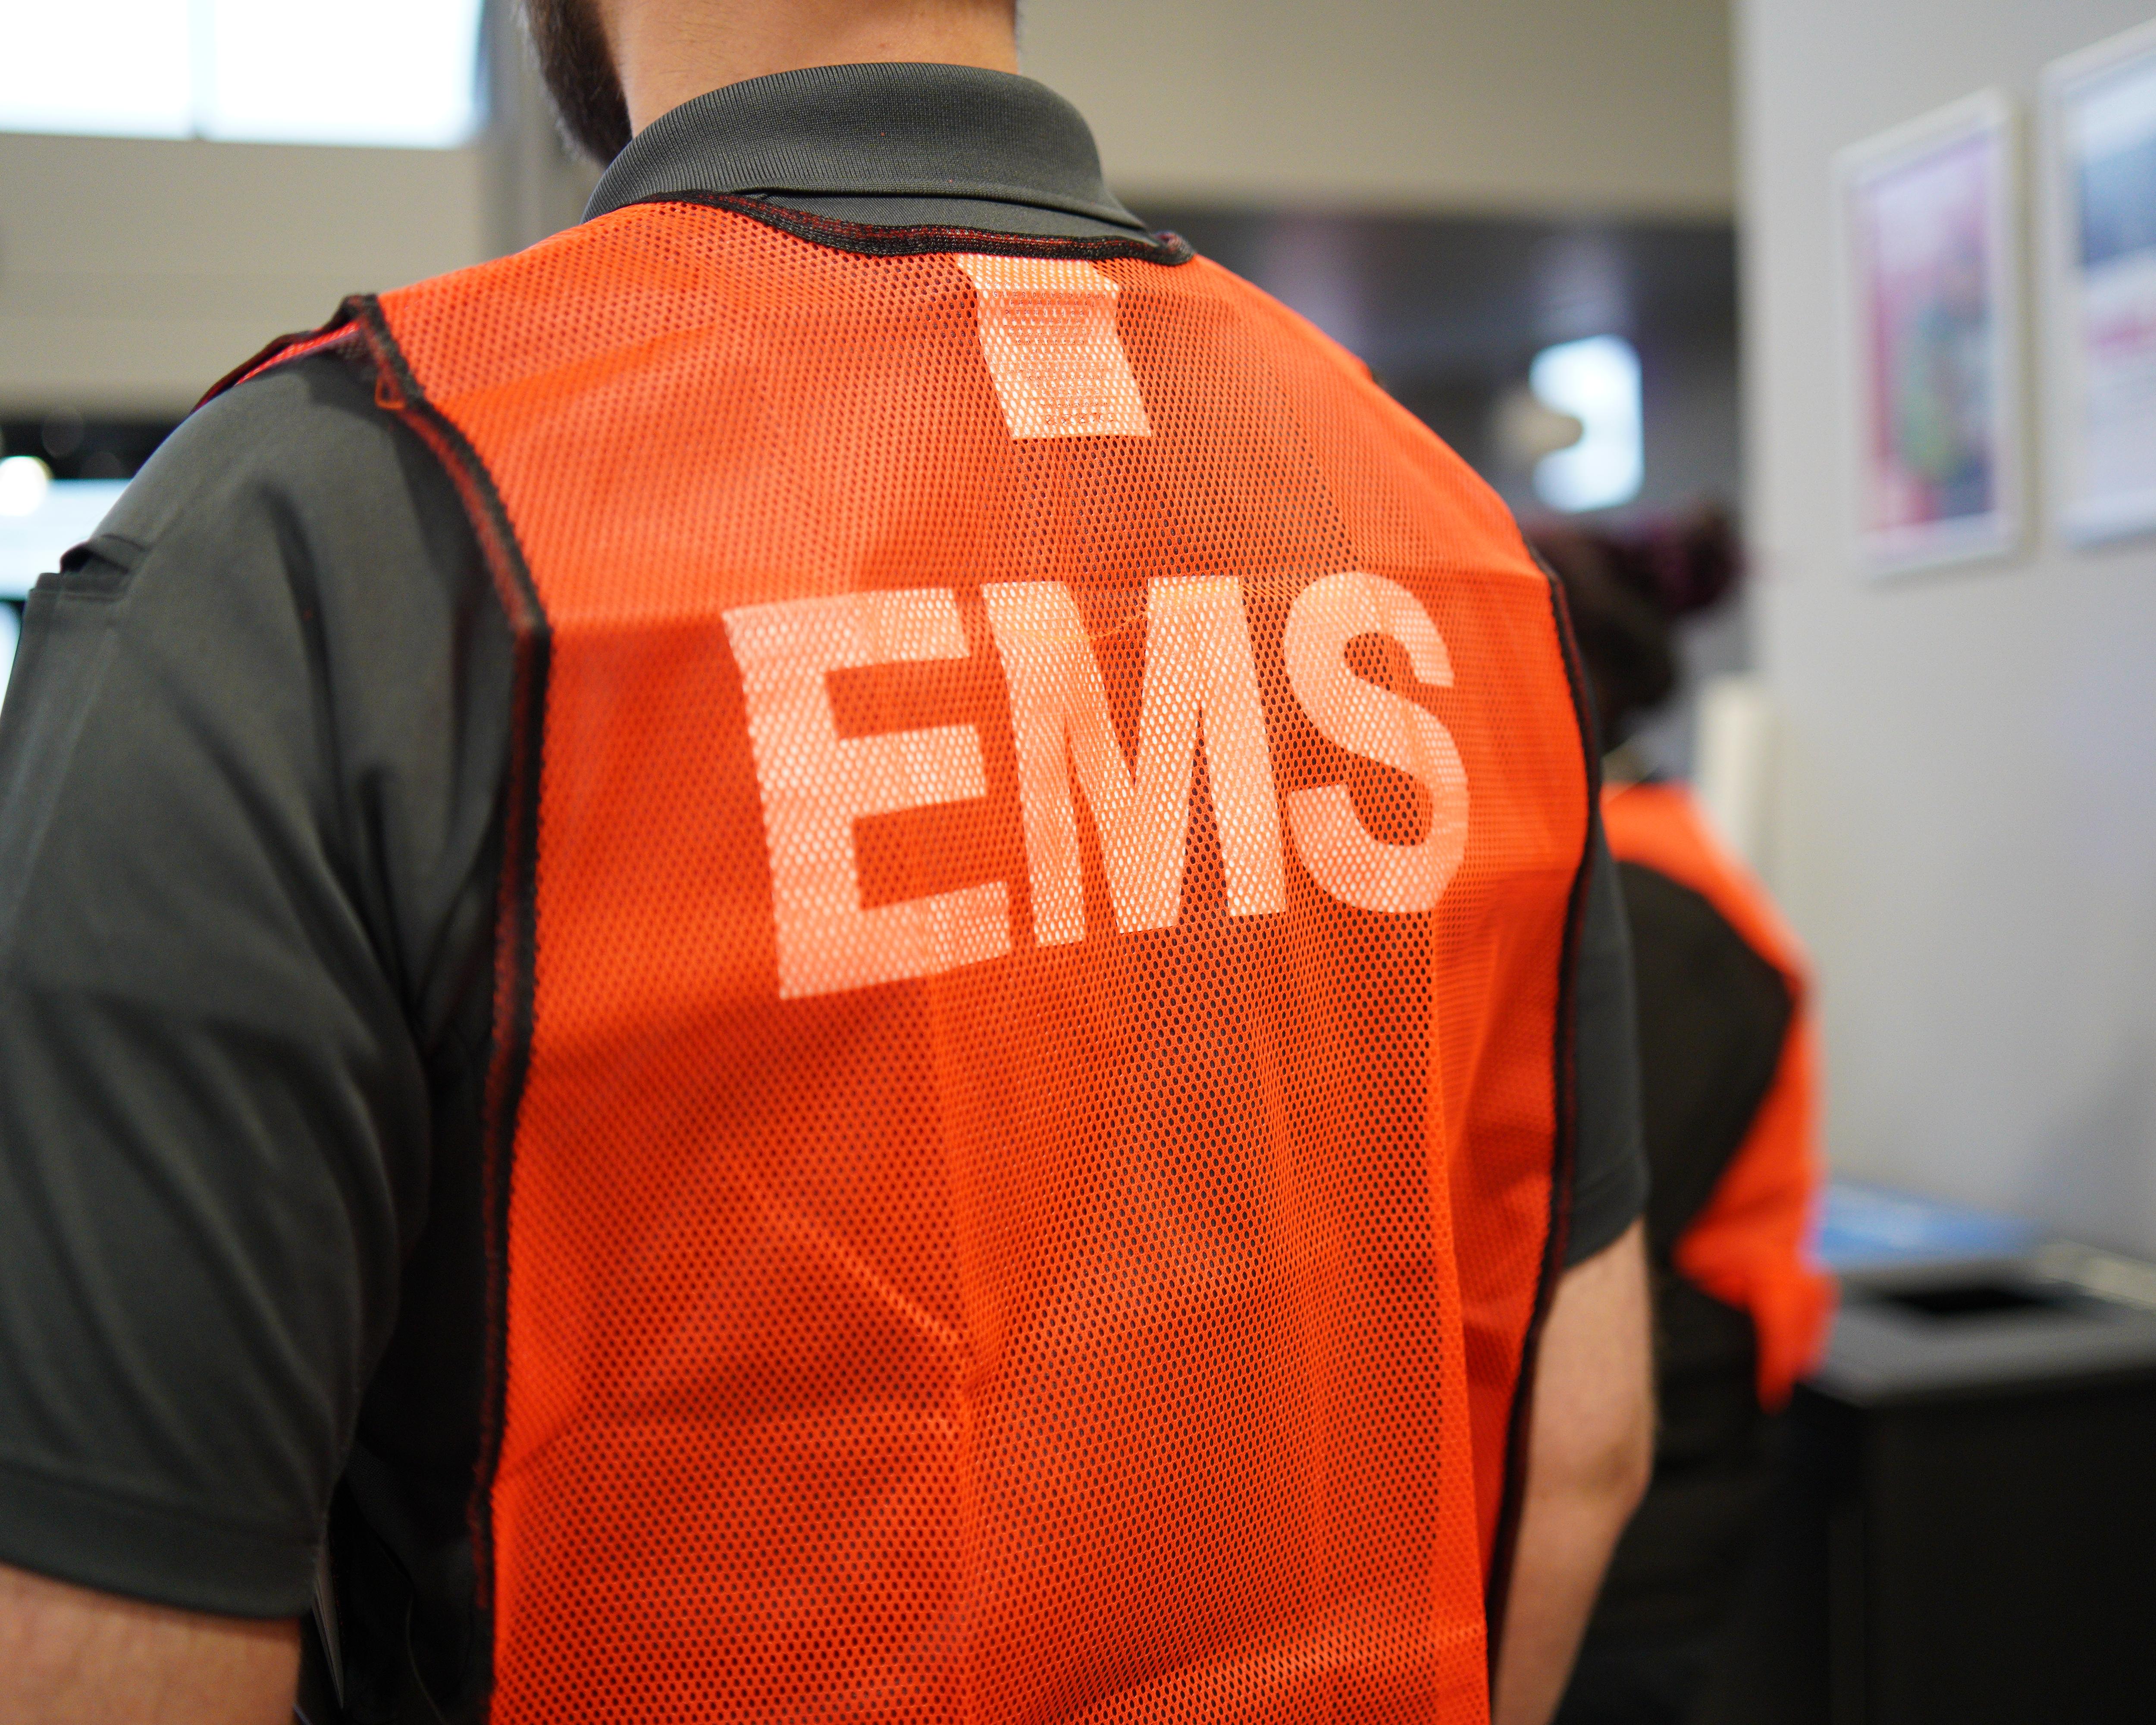 EMS worker standing